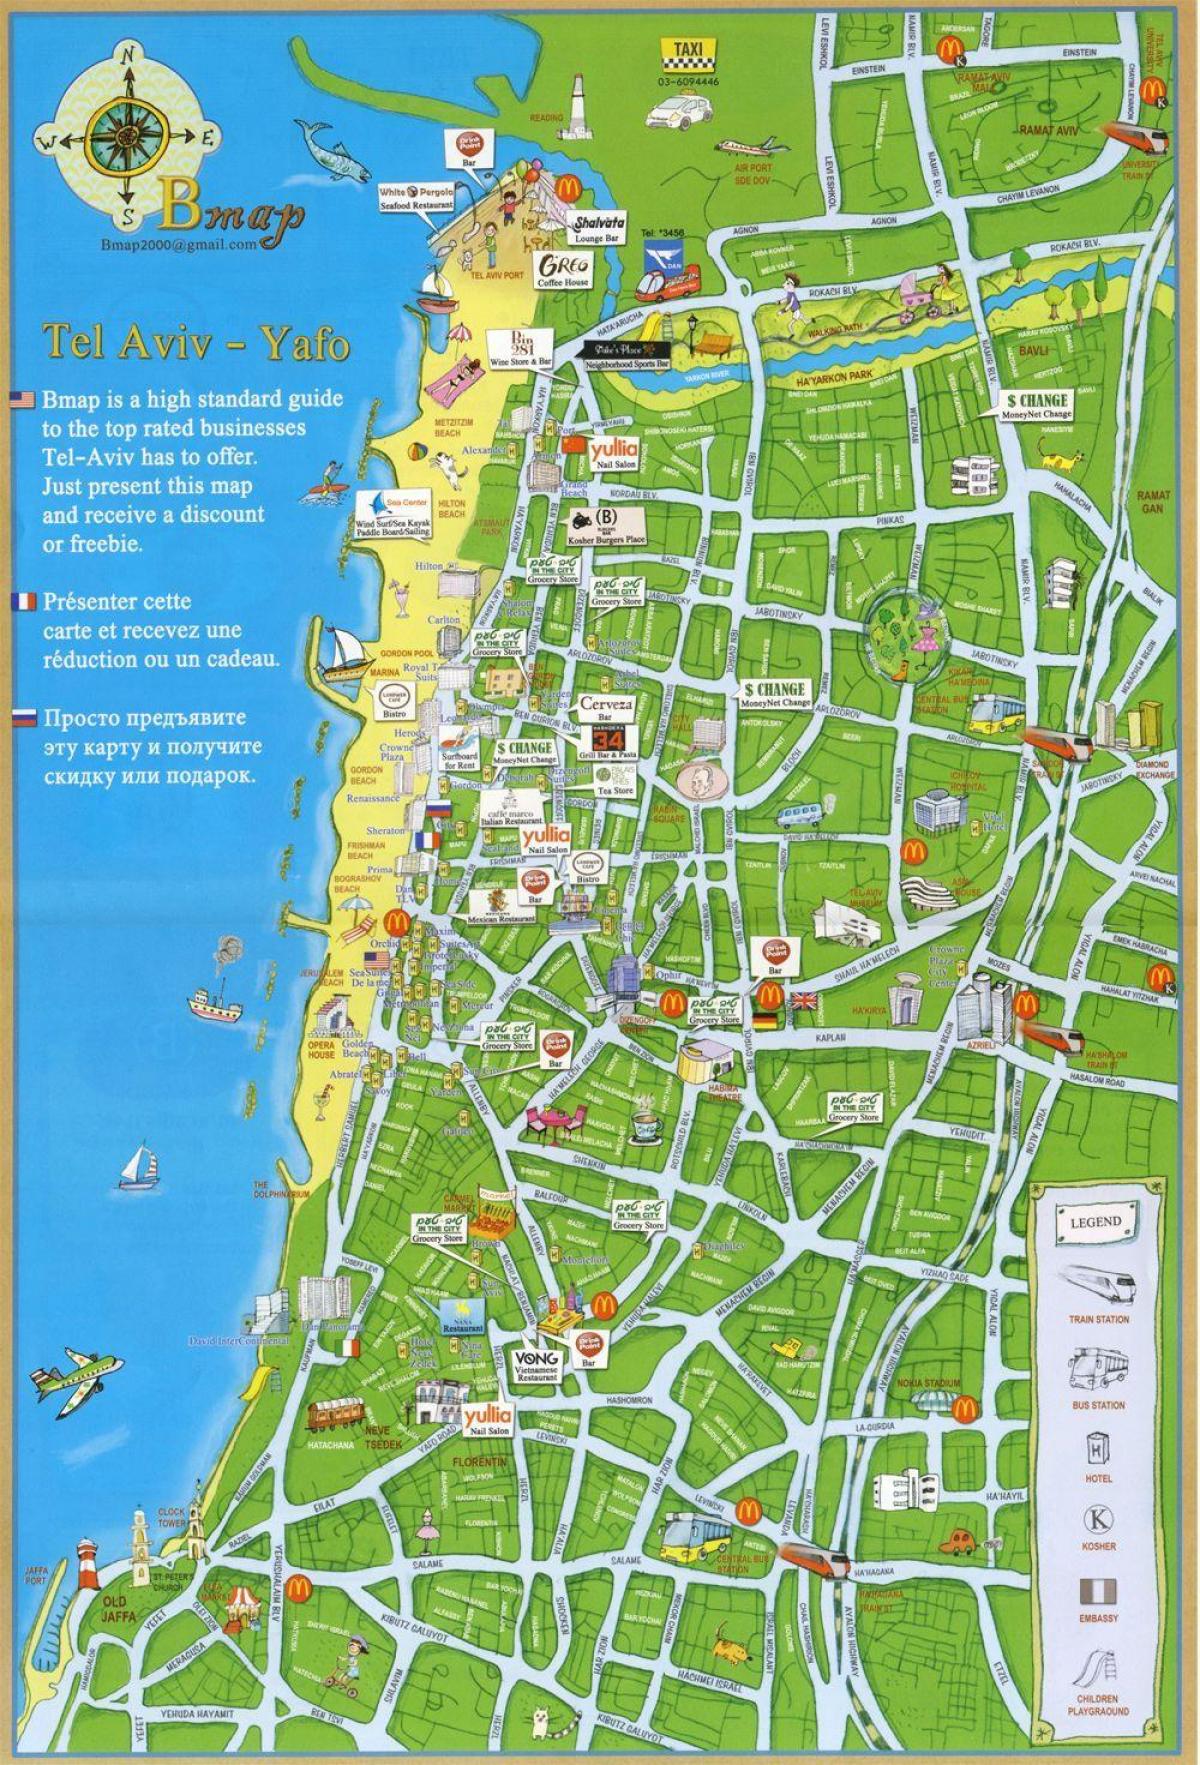 Tel Aviv hấp dẫn, bản đồ